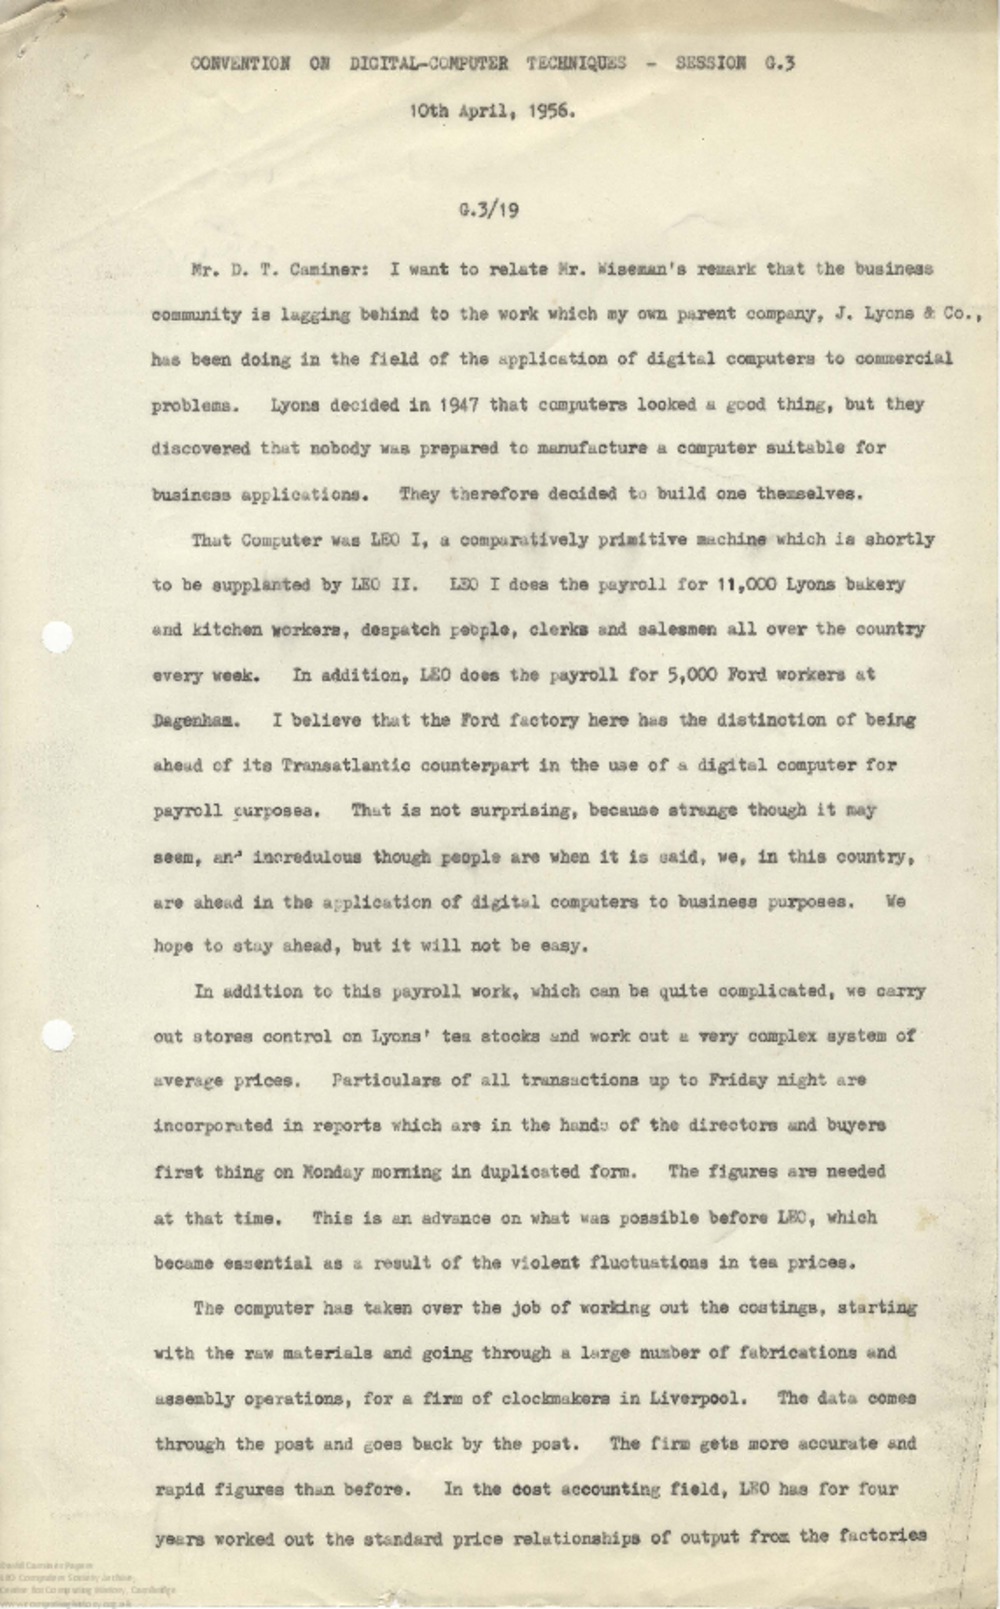 Article: 63977  Convention on Digital-Computer Techniques, 10 Apr 1956